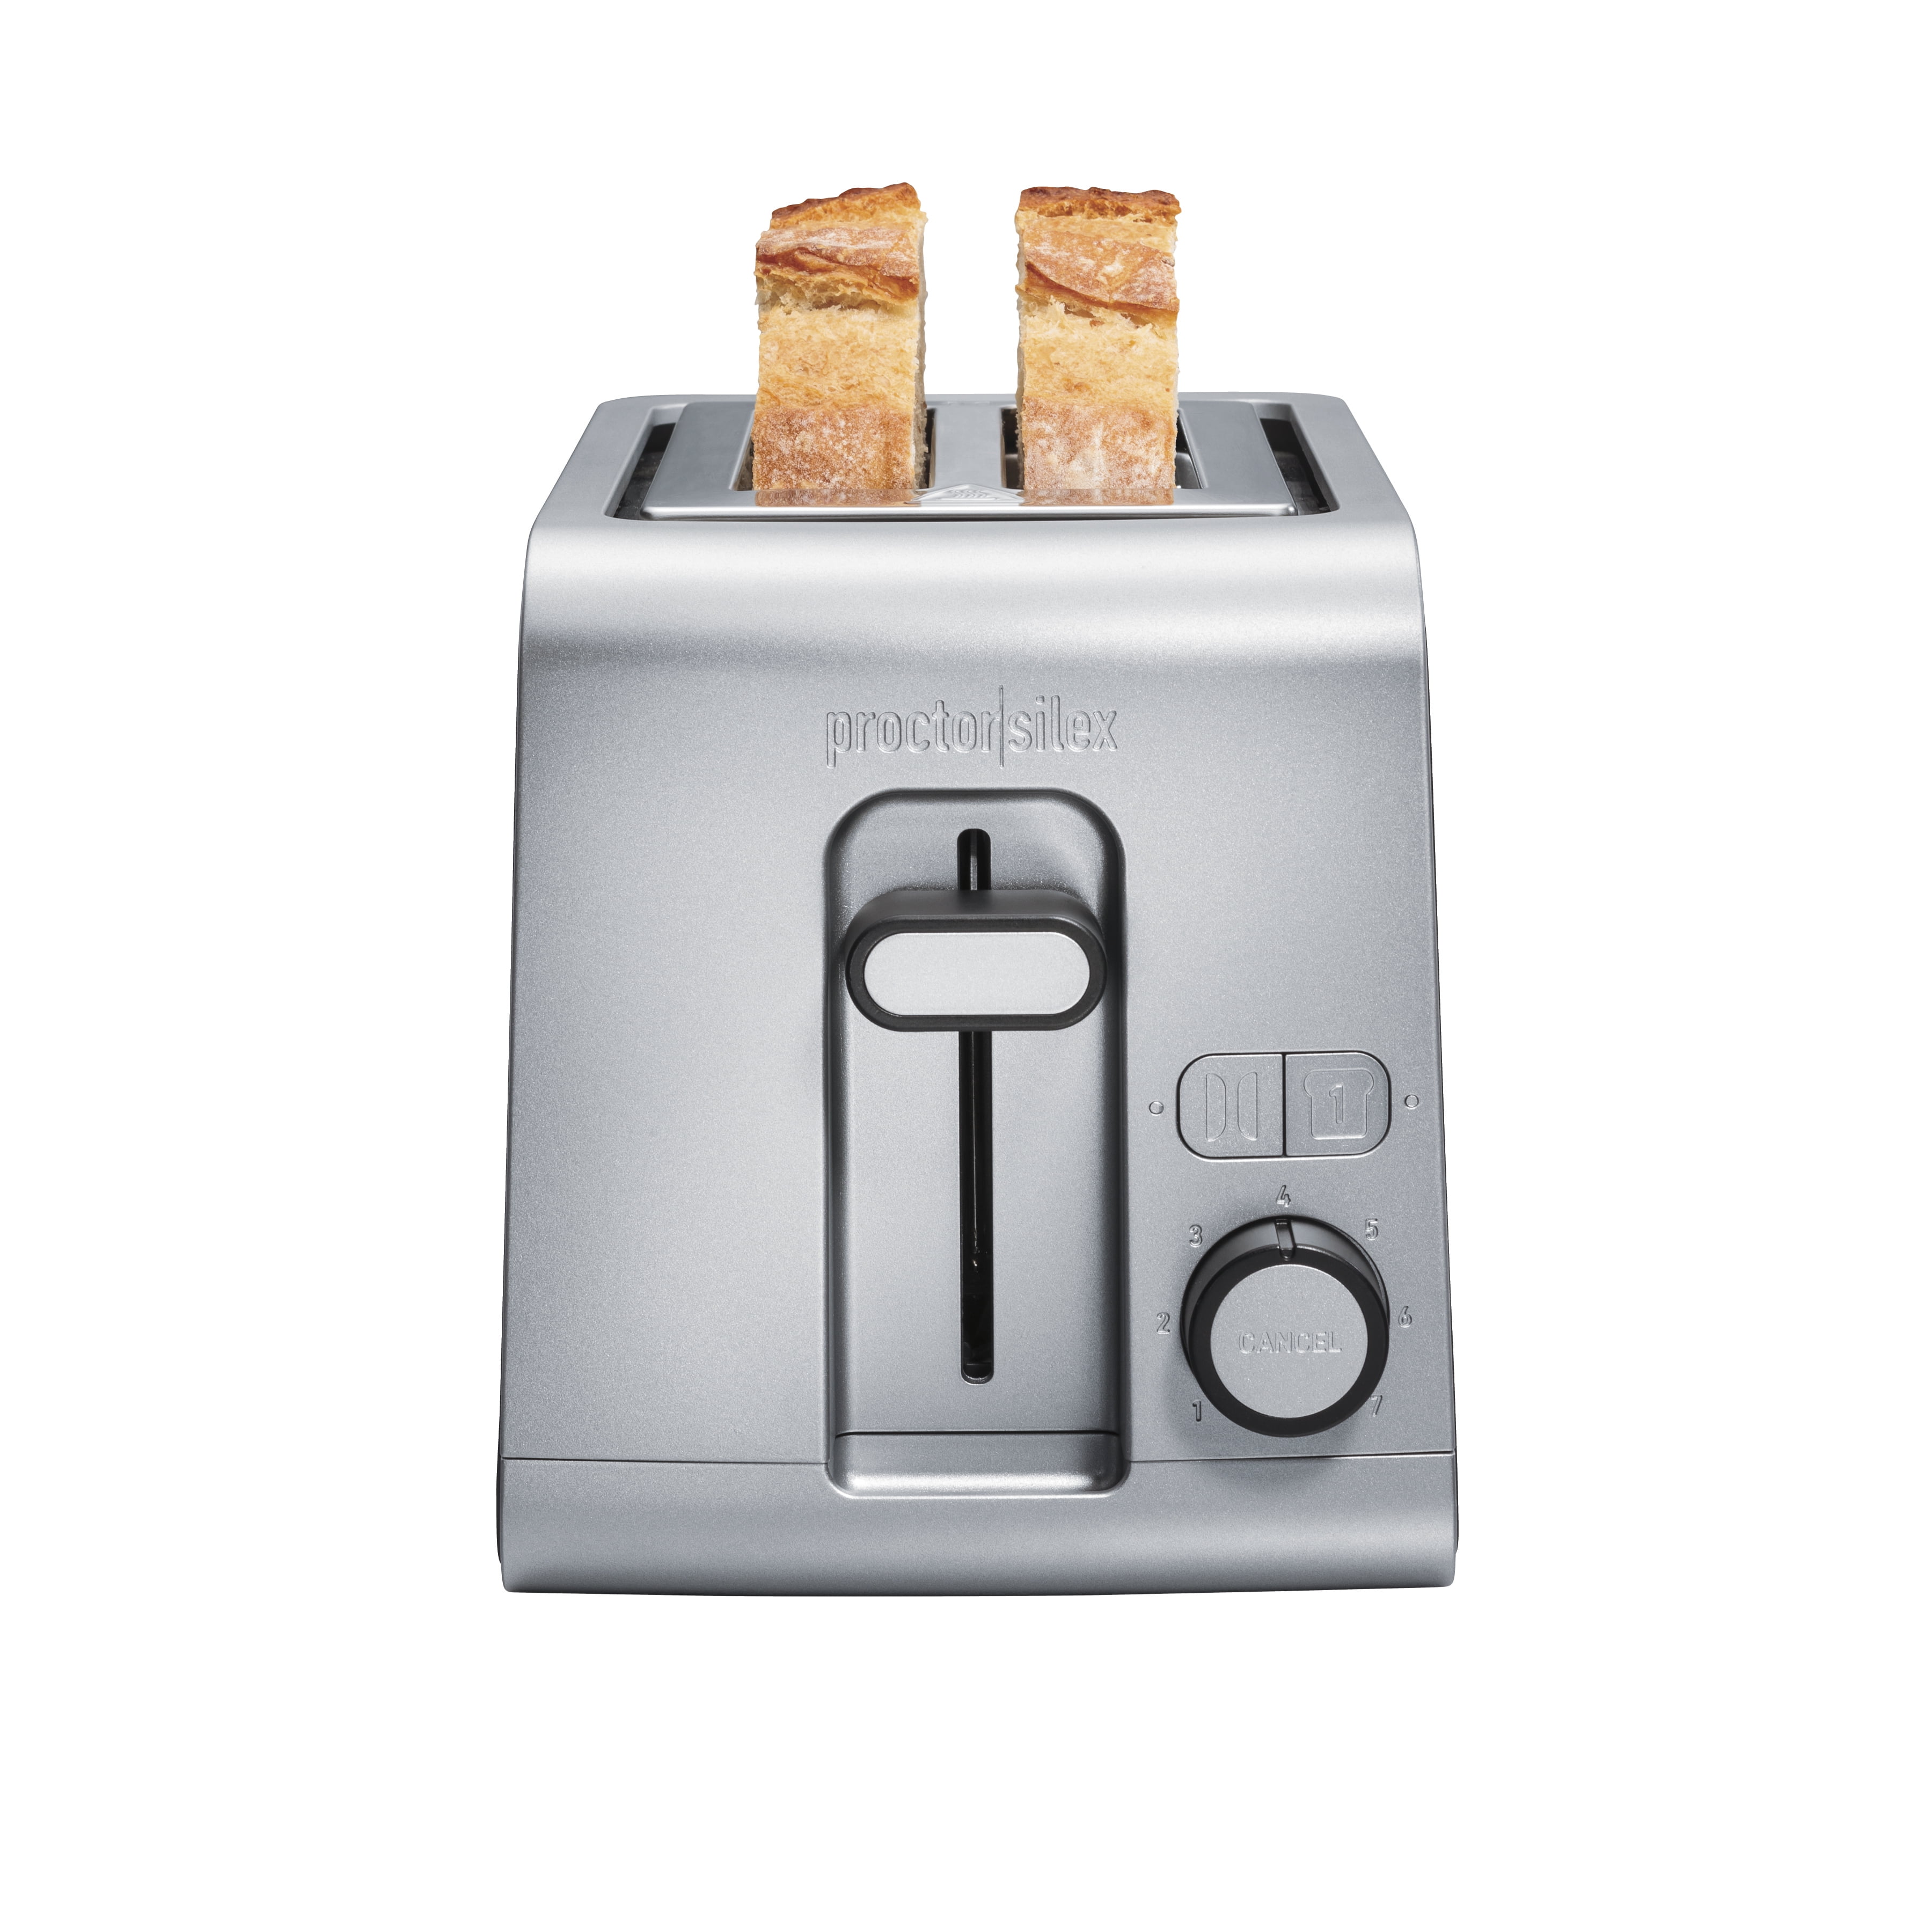 Proctor Silex Wide Slot 4-Slice Toaster - Black